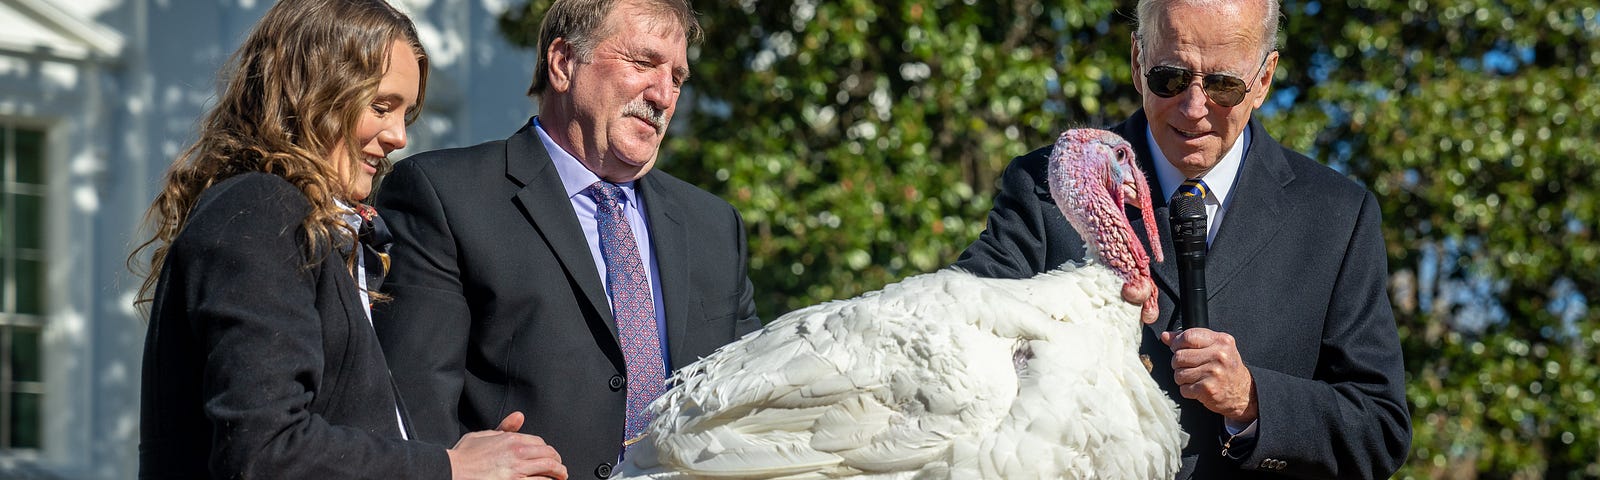 President Biden pardoning two turkeys as per annual tradition